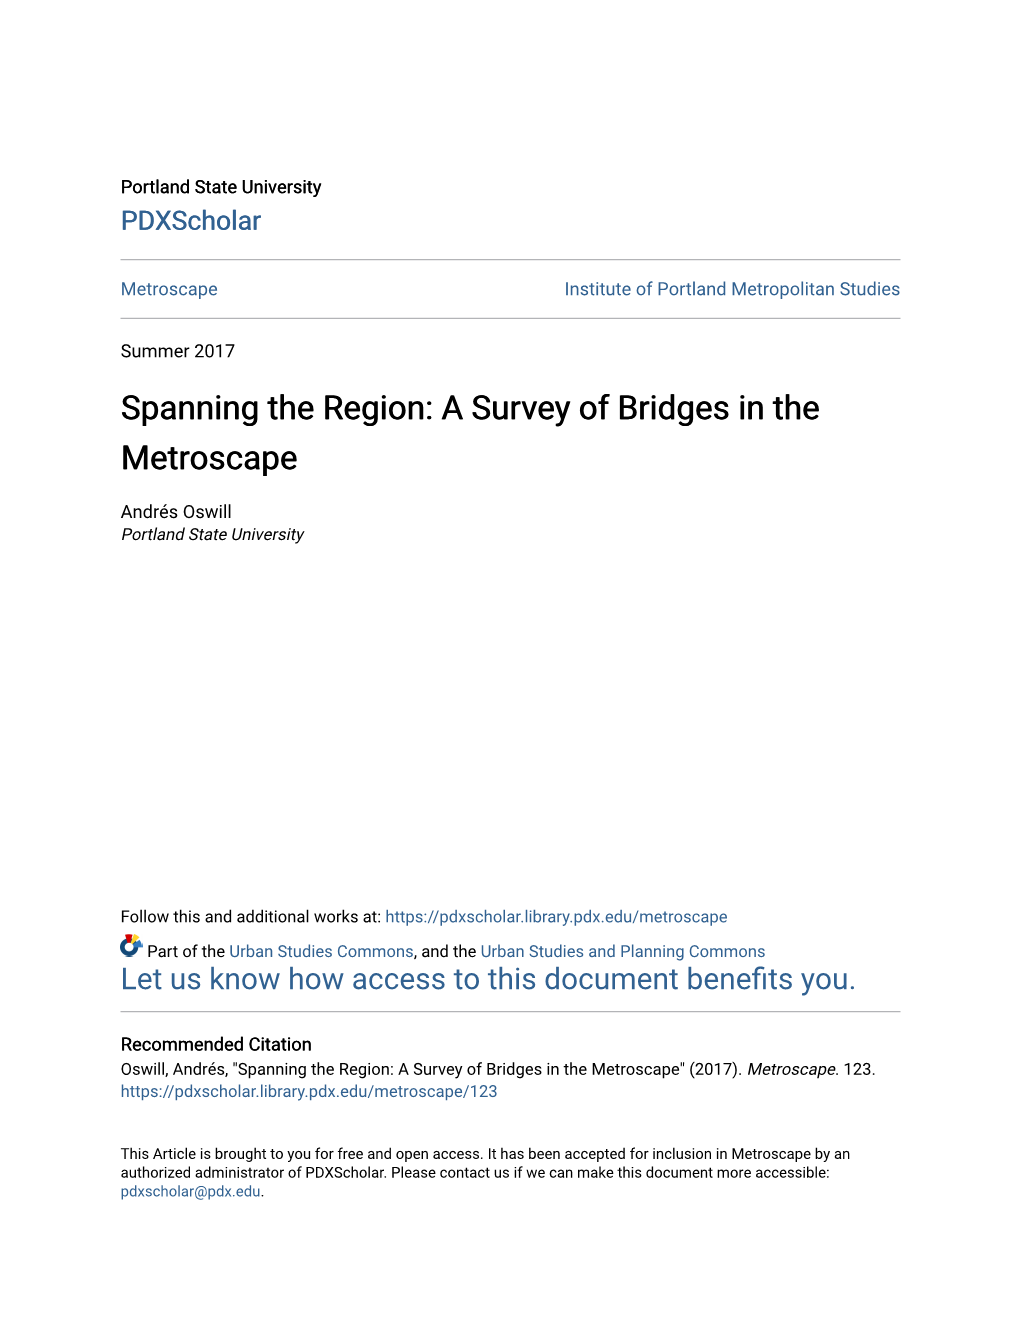 Spanning the Region: a Survey of Bridges in the Metroscape